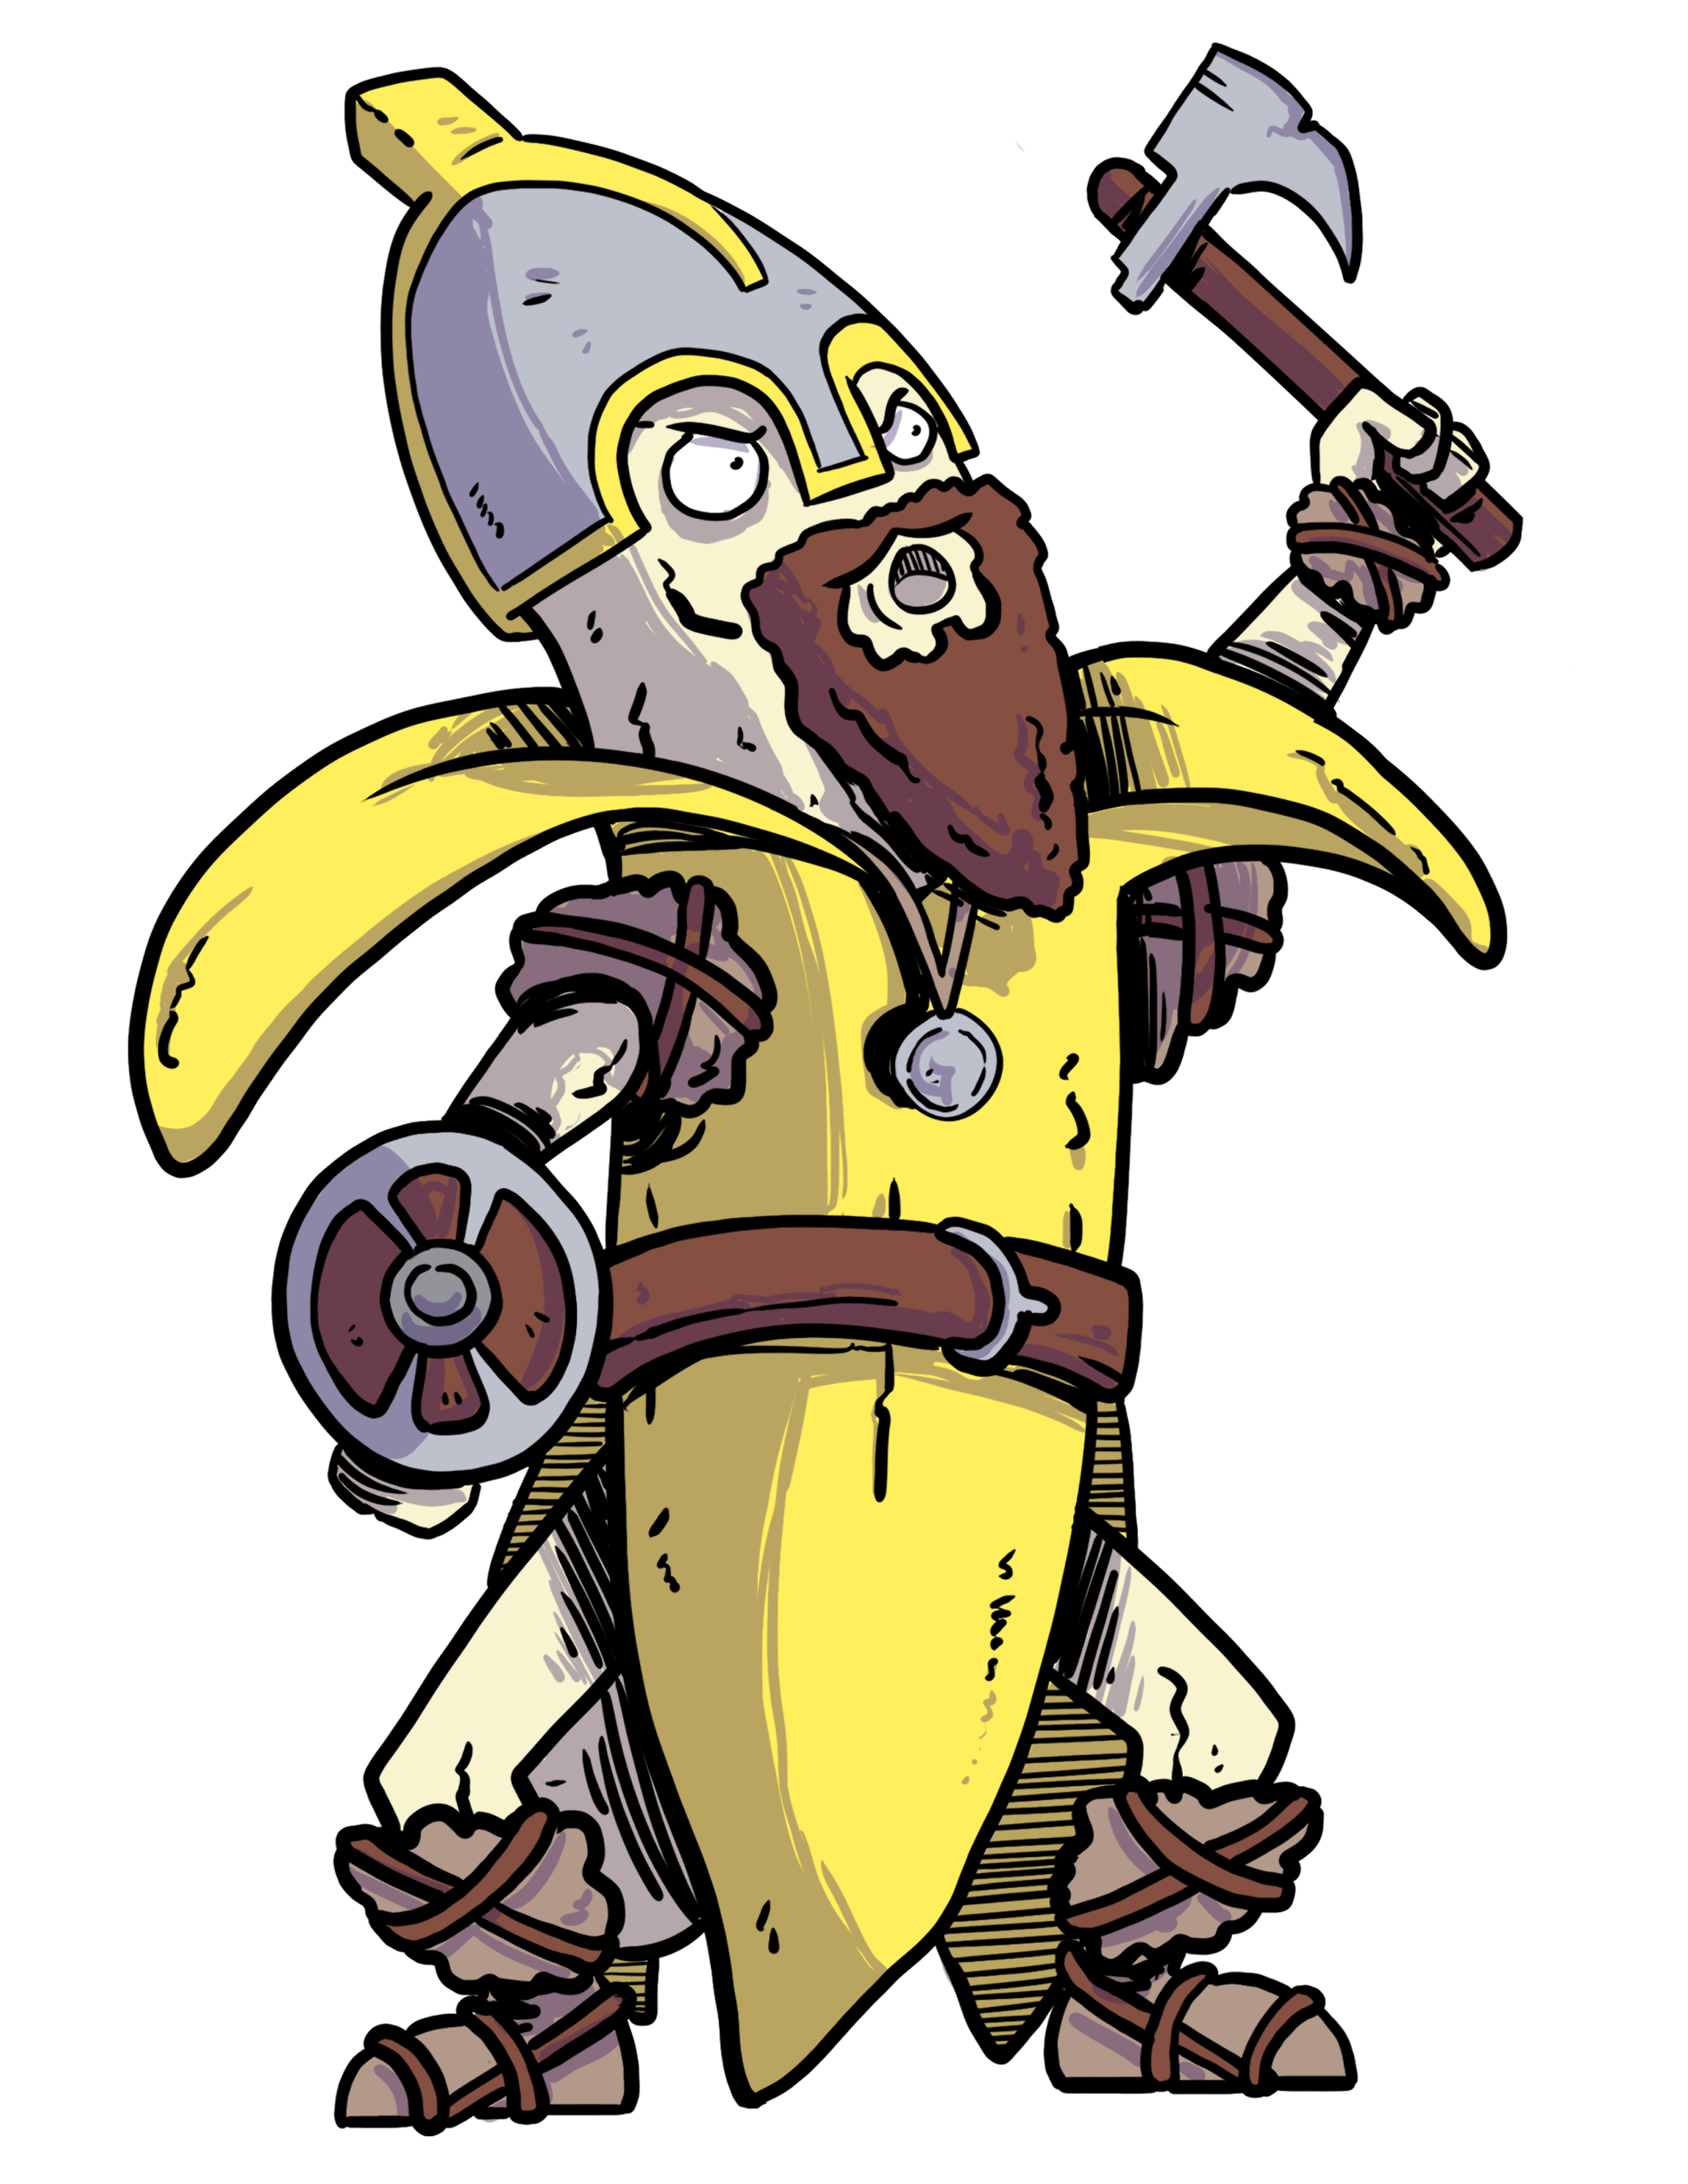 impulse banana mascot of a live banana in viking gear